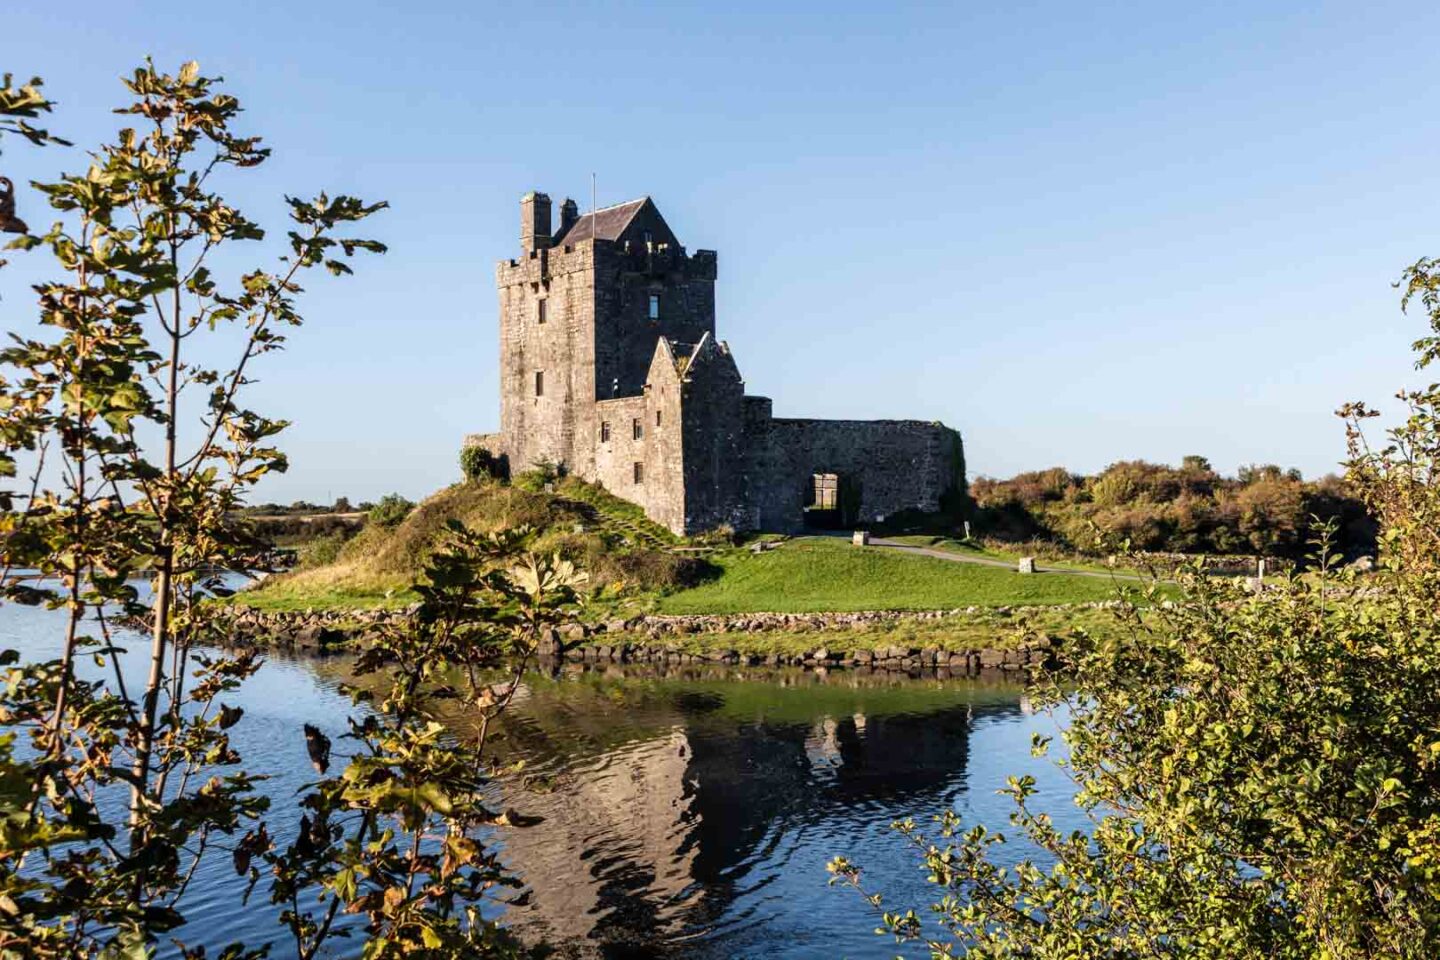 Dunguaire Castle in Ireland